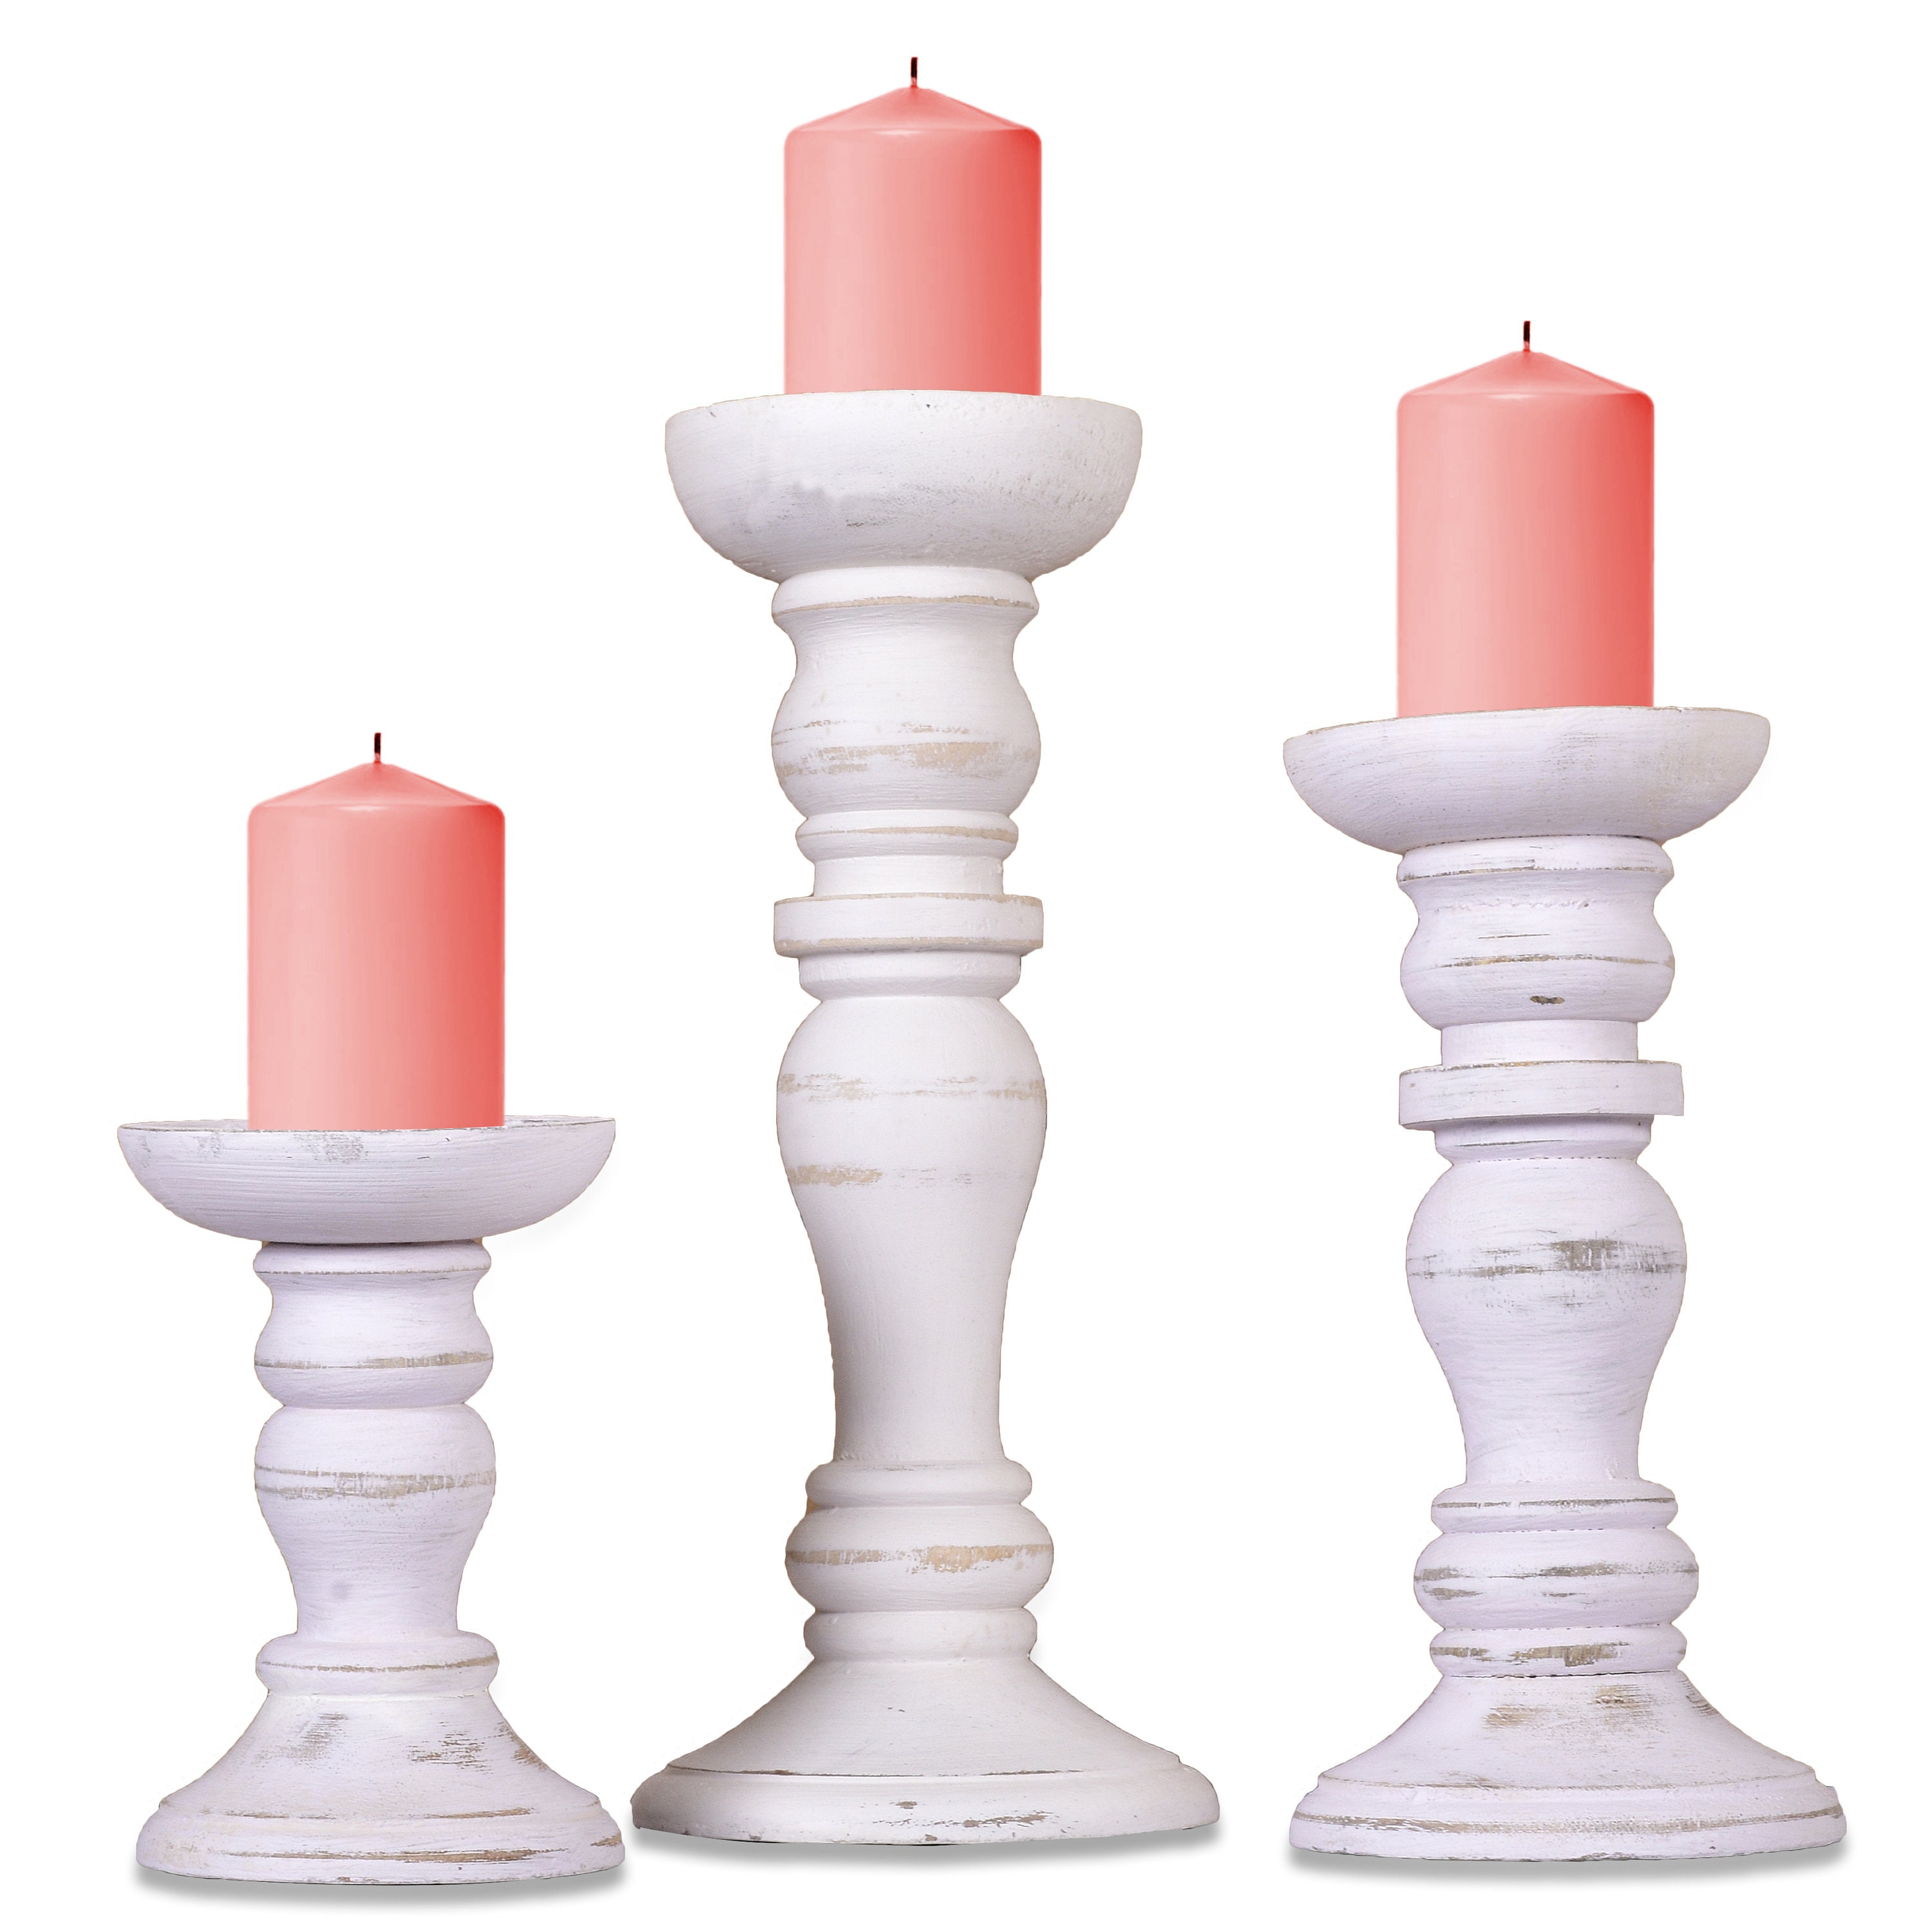 Mela Artisans Matte Black Candle Holders for Pillar Candles (Set of 3)  Rustic Wooden Candle Holders Pillar 6, 9, 12